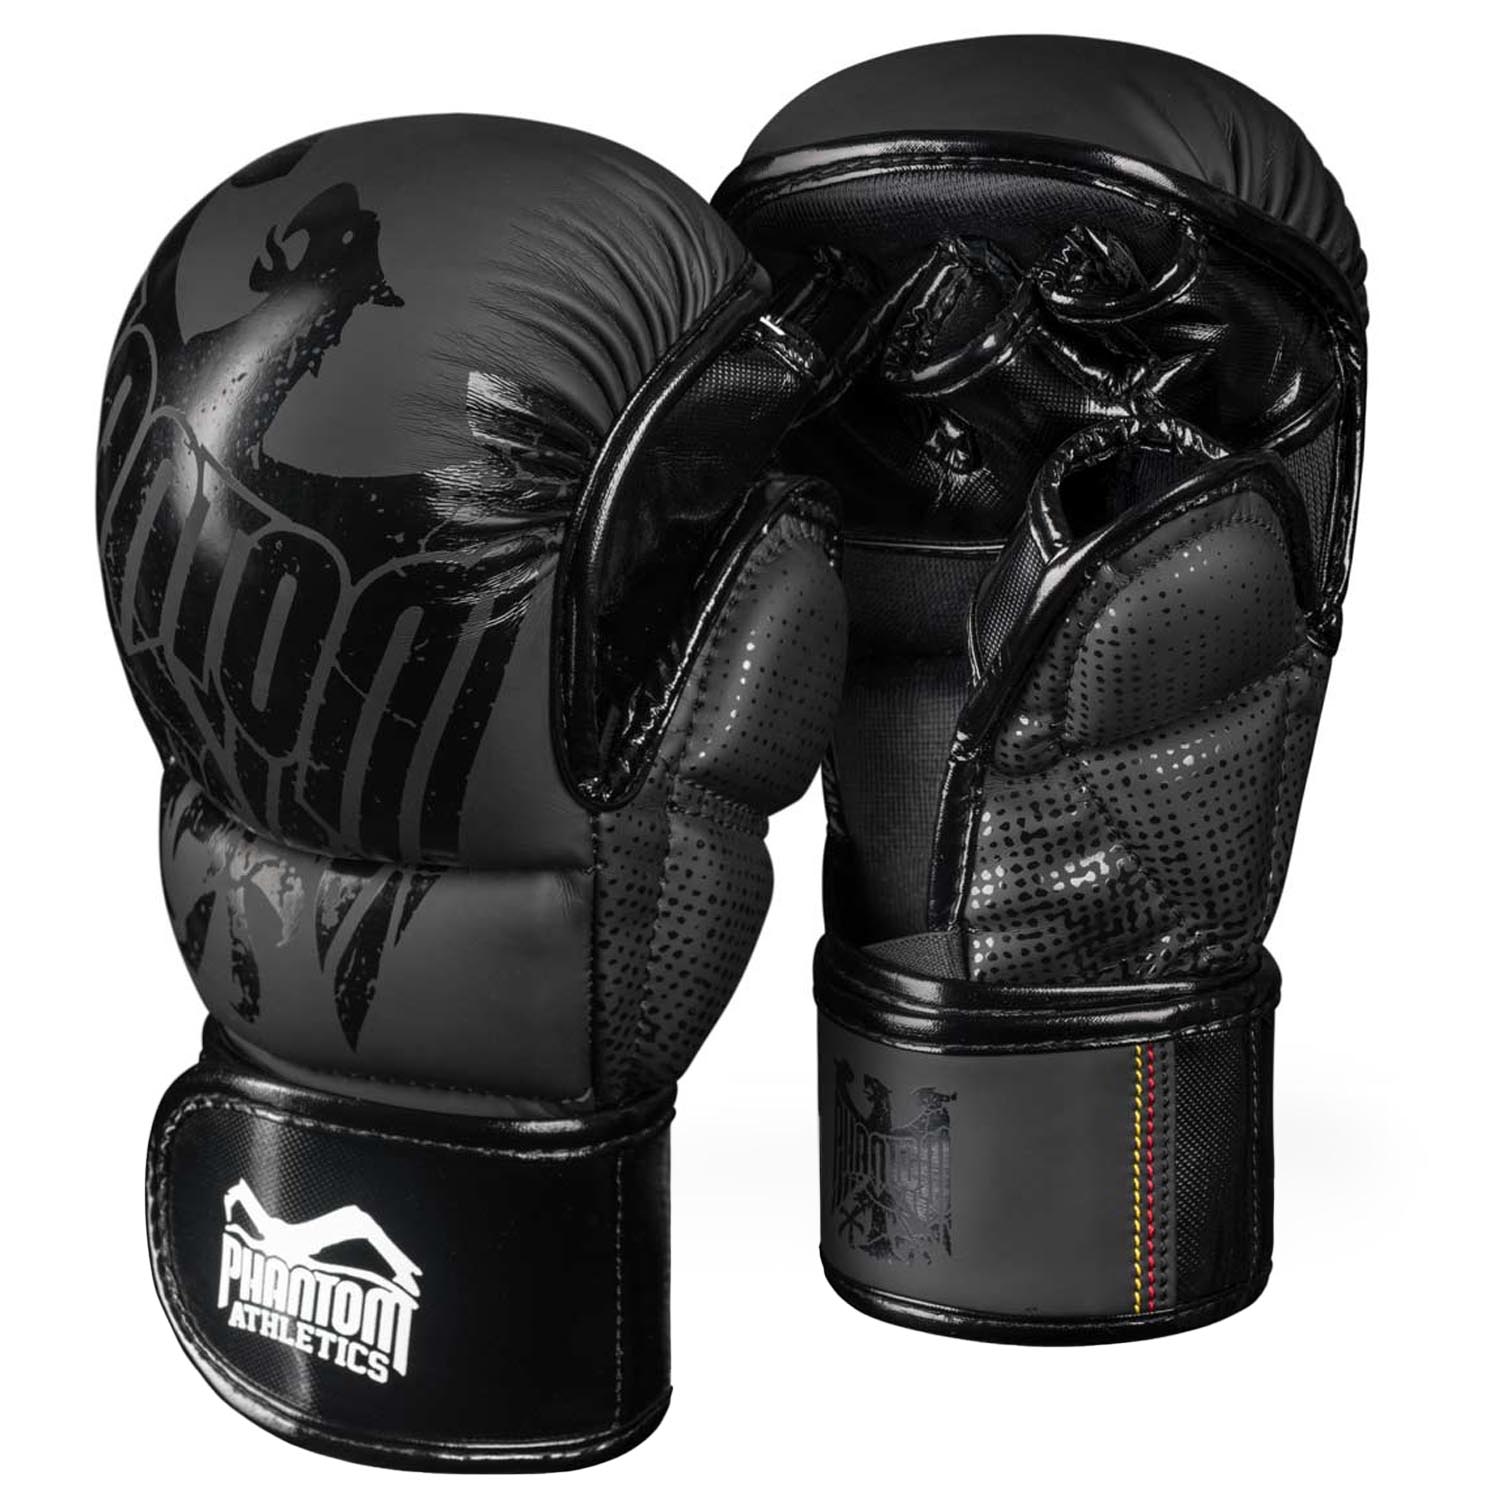 Phantom Athletics MMA Boxing Gloves, German Eagle, Sparring, black